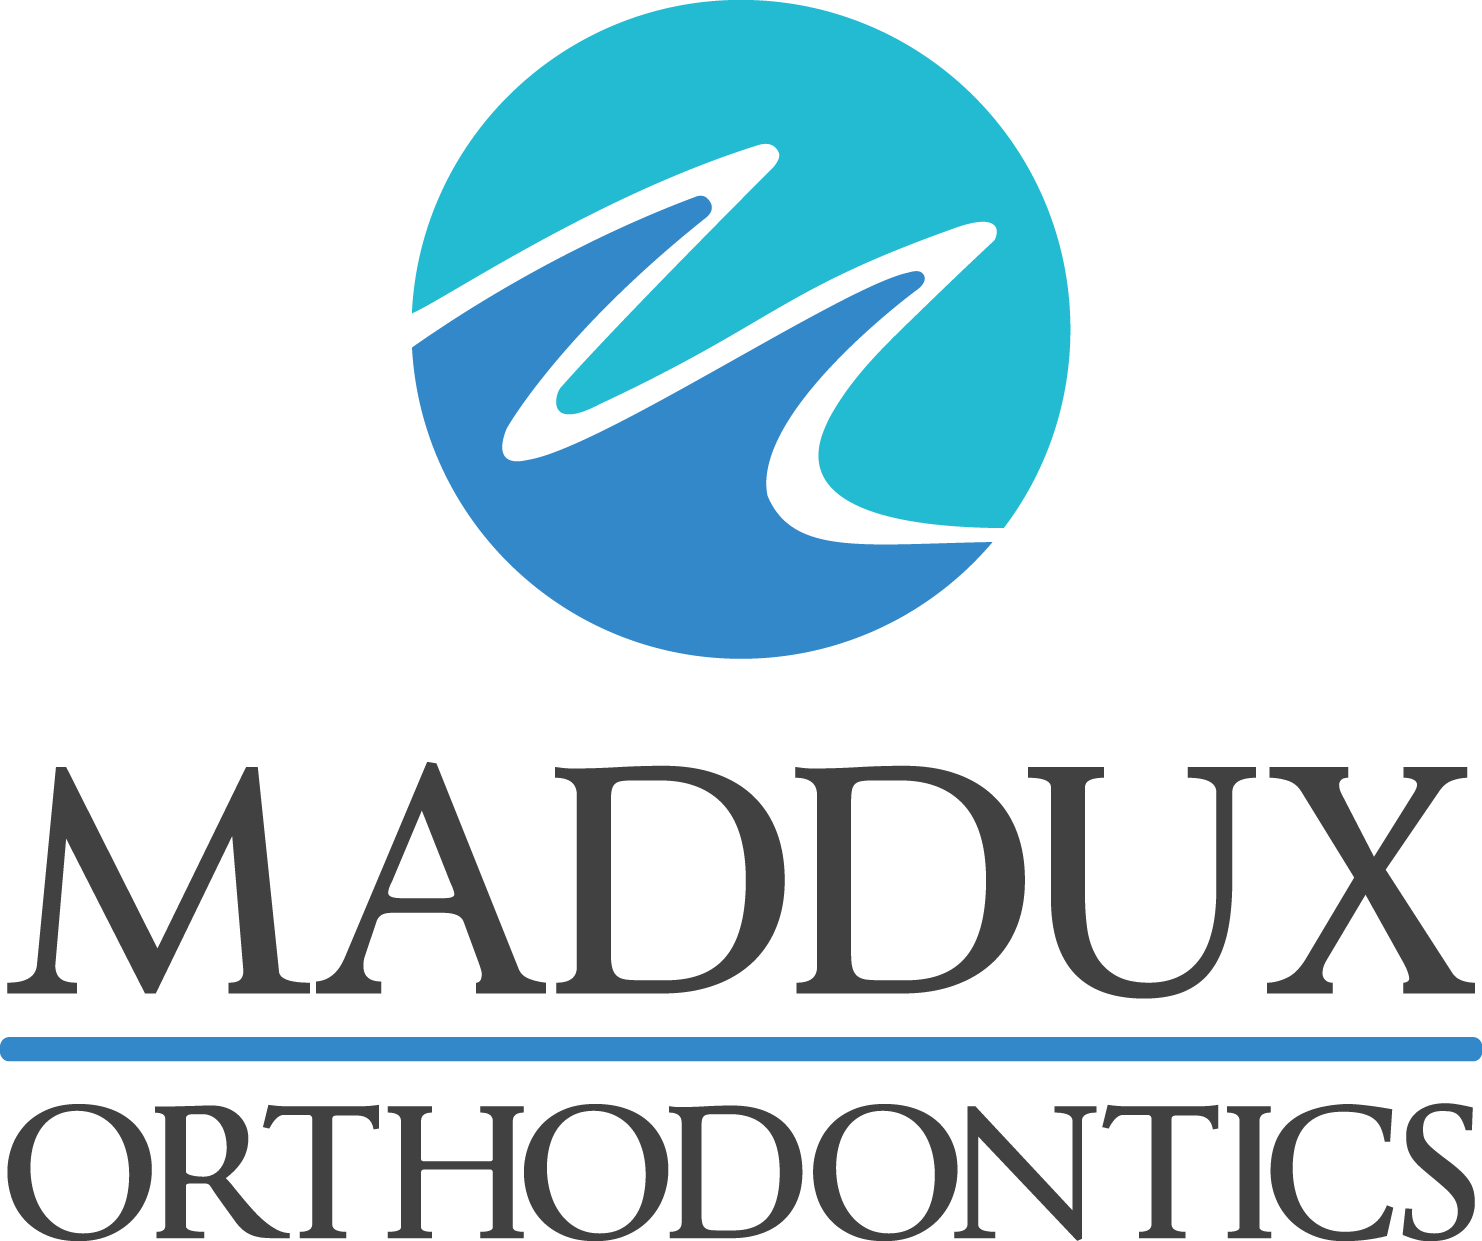 maddux_orthodontics_logo_stacked.png